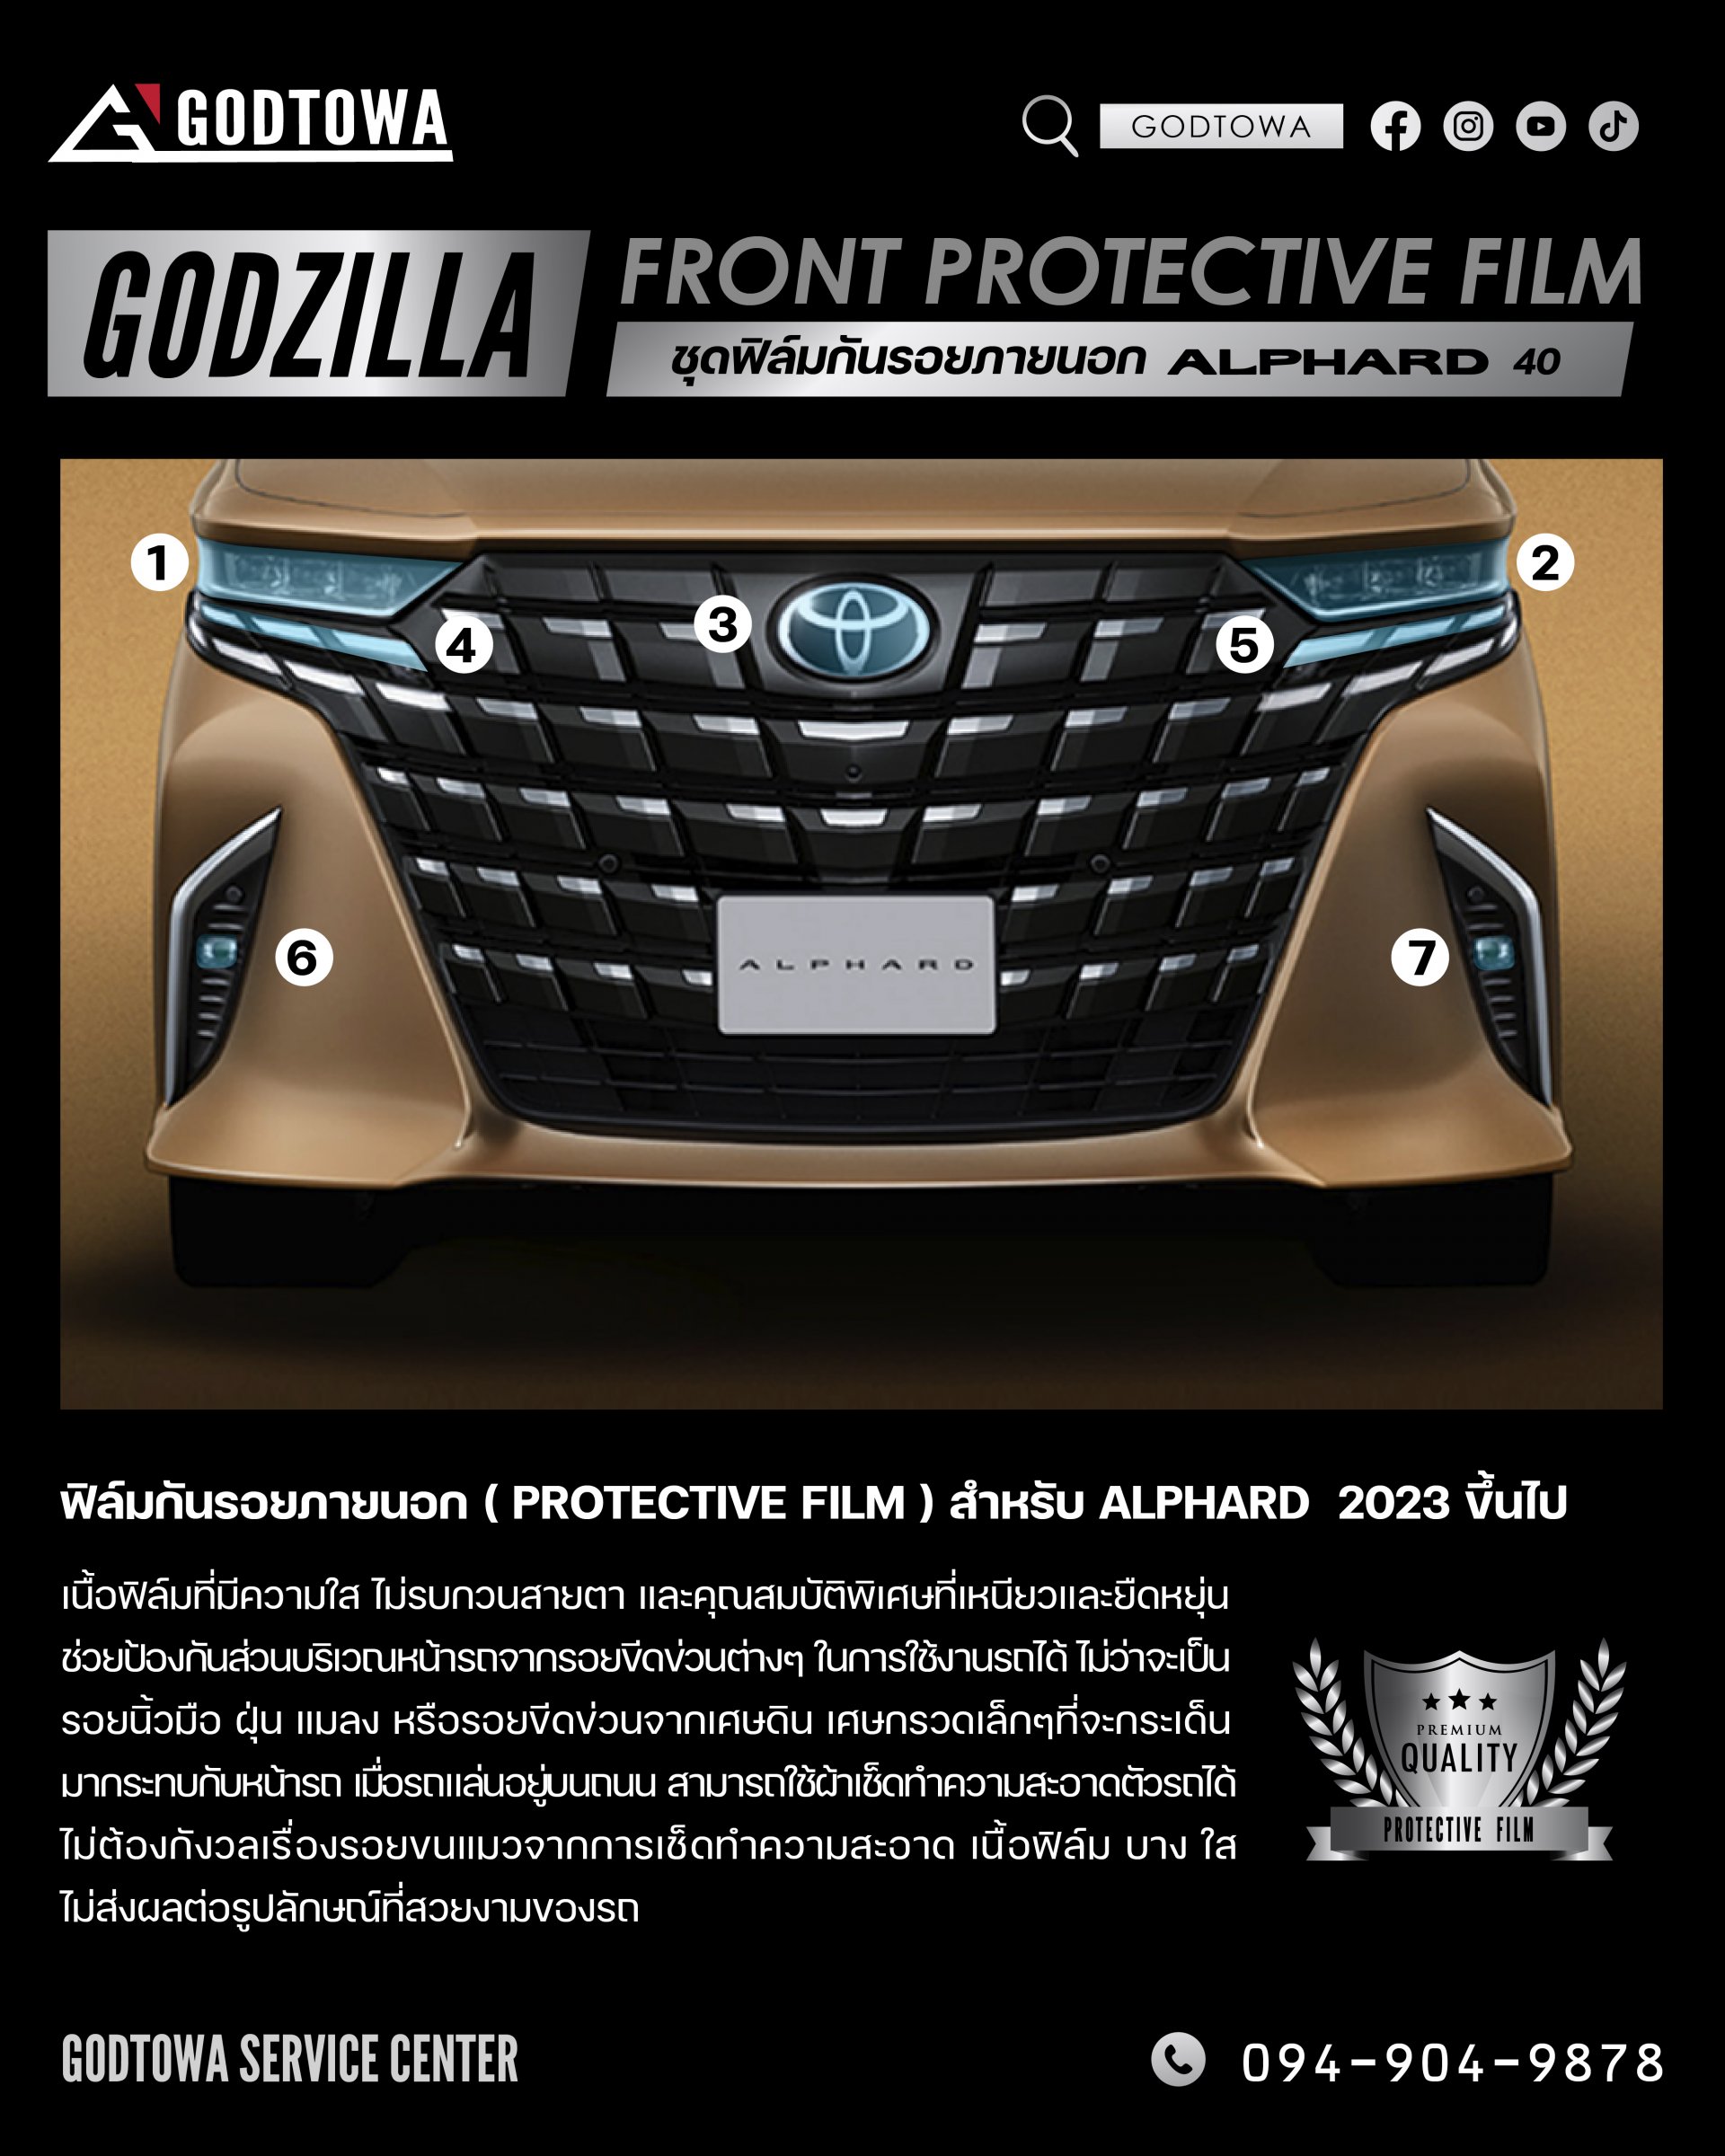 Protection Film ฟิล์มกันรอยชุดหน้า  สำหรับรถยนต์ ALPHARD 40 รุ่นปี 2023 ขึ้นไป